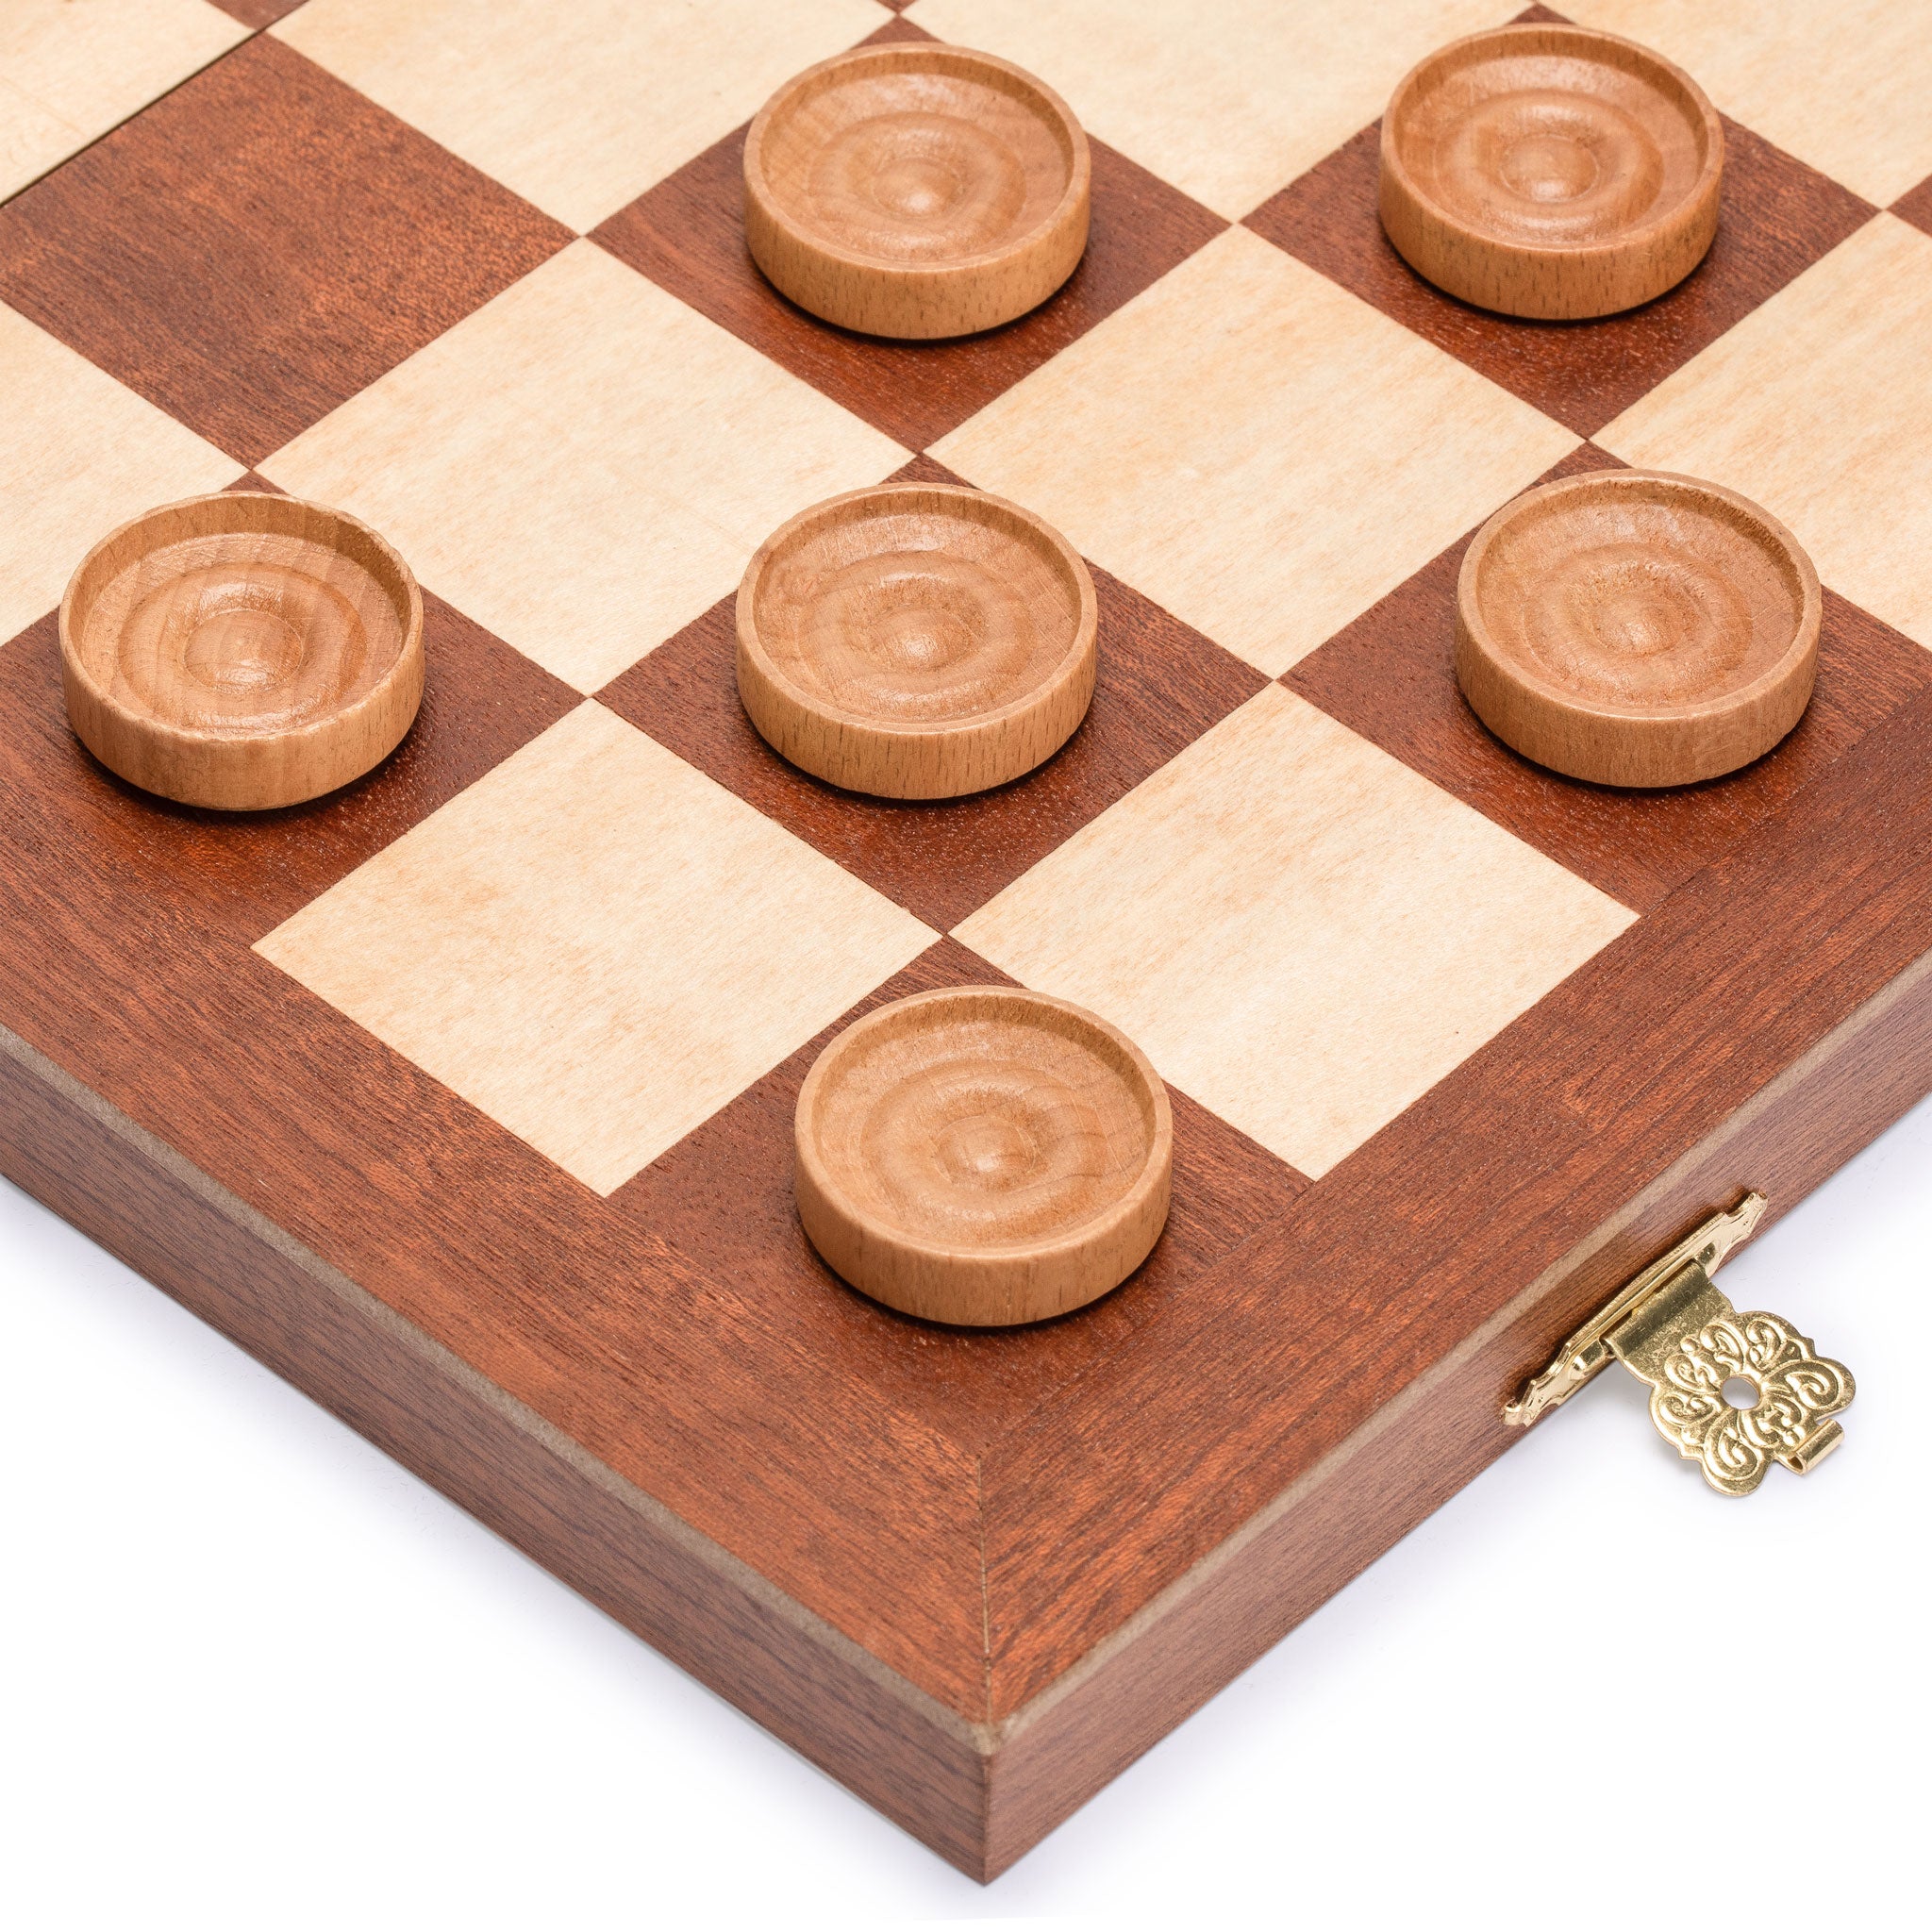 Husaria 14.2" International Checkers Folding Wooden Game Set - 8x8 Board-Husaria